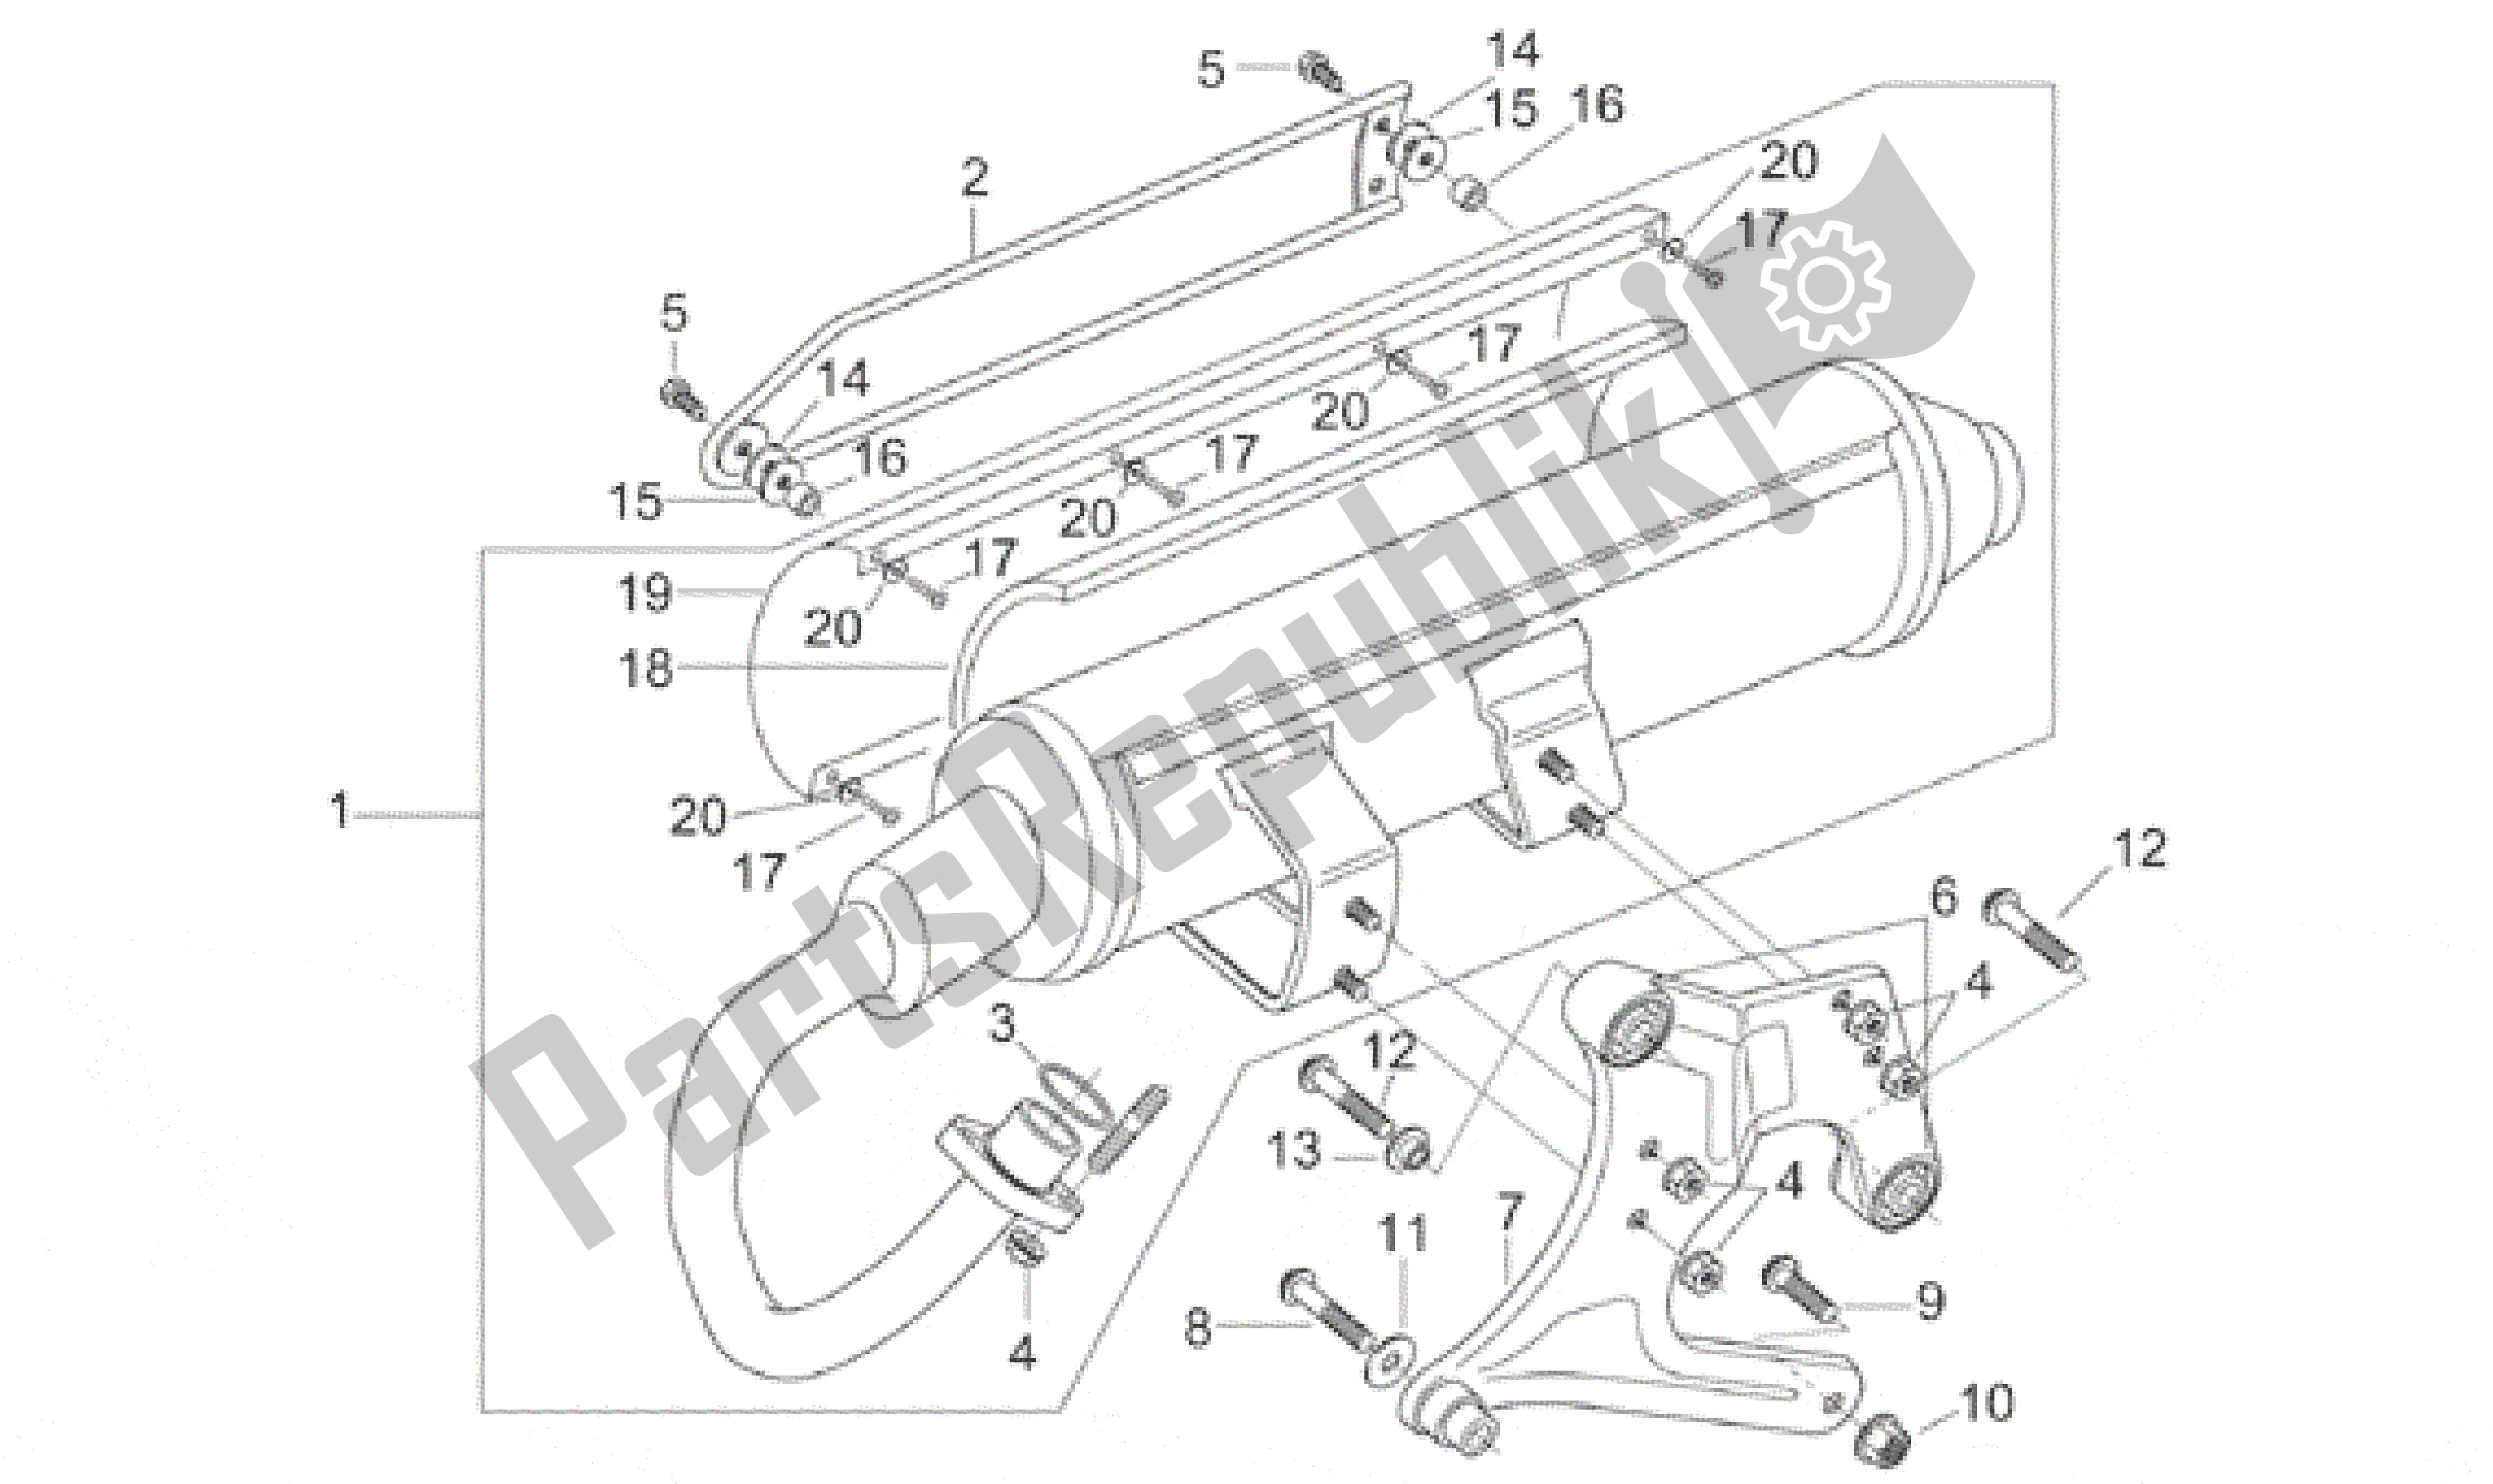 All parts for the Exhaust Unit of the Aprilia Leonardo 125 1999 - 2001